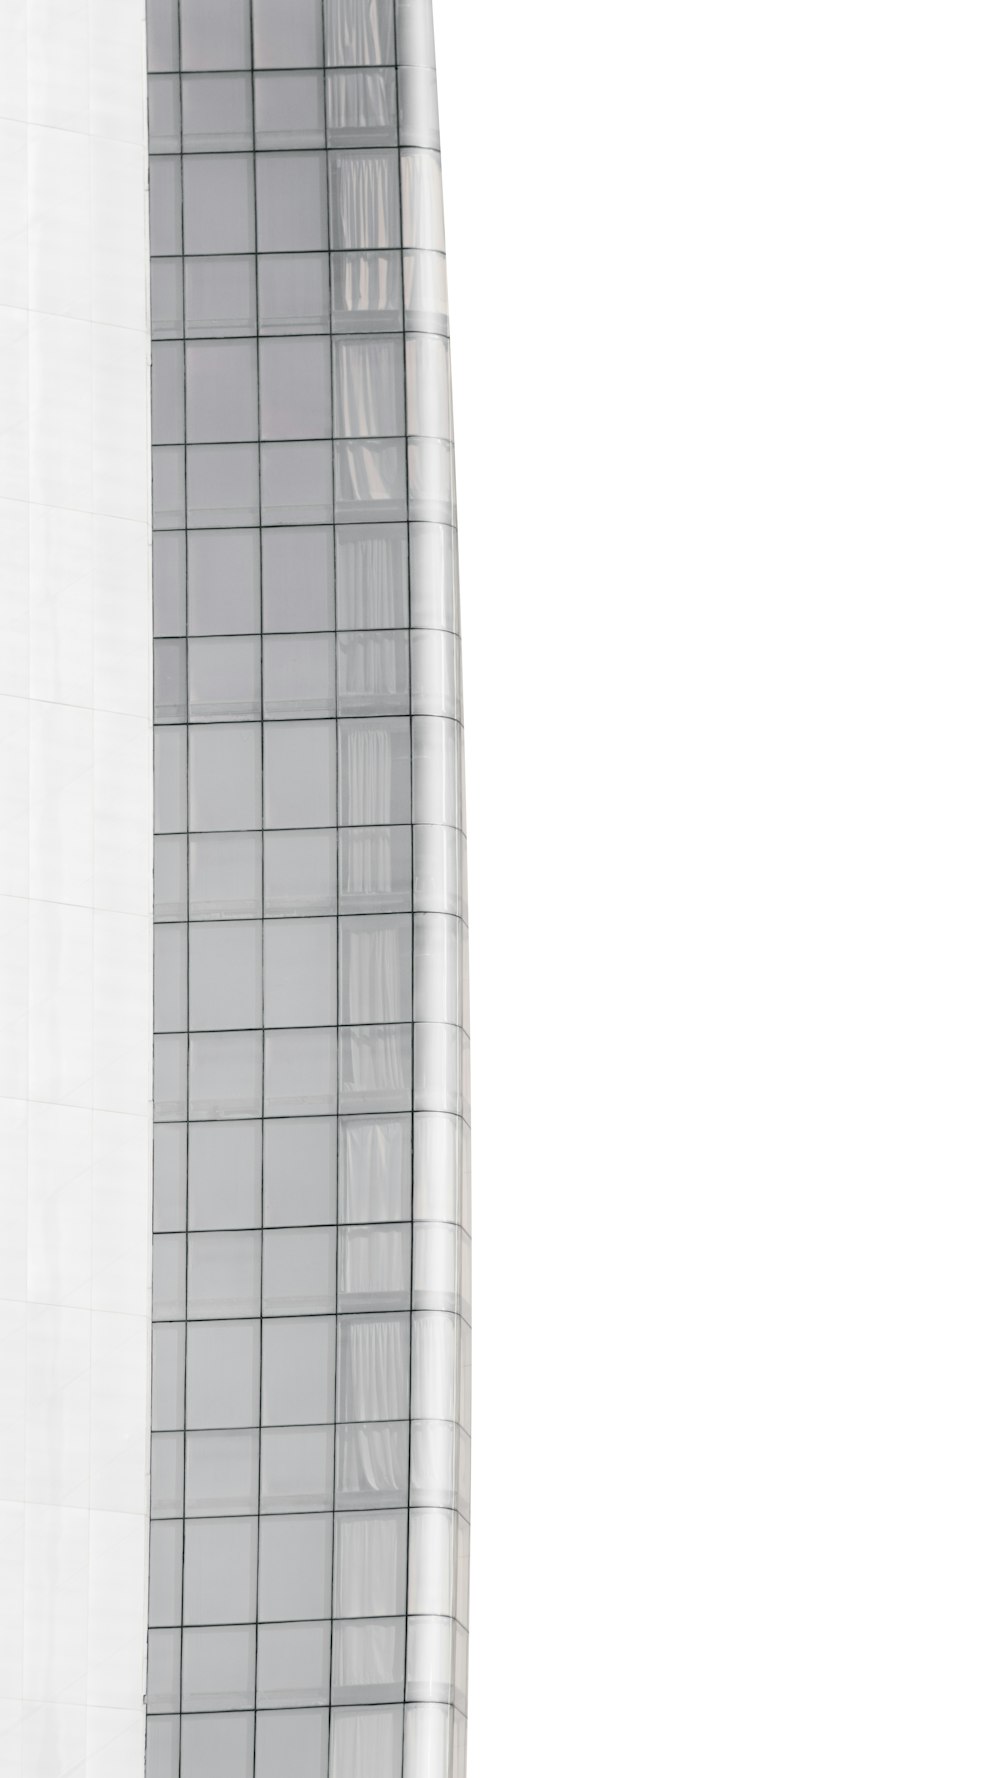 edifício de concreto branco com janelas de vidro